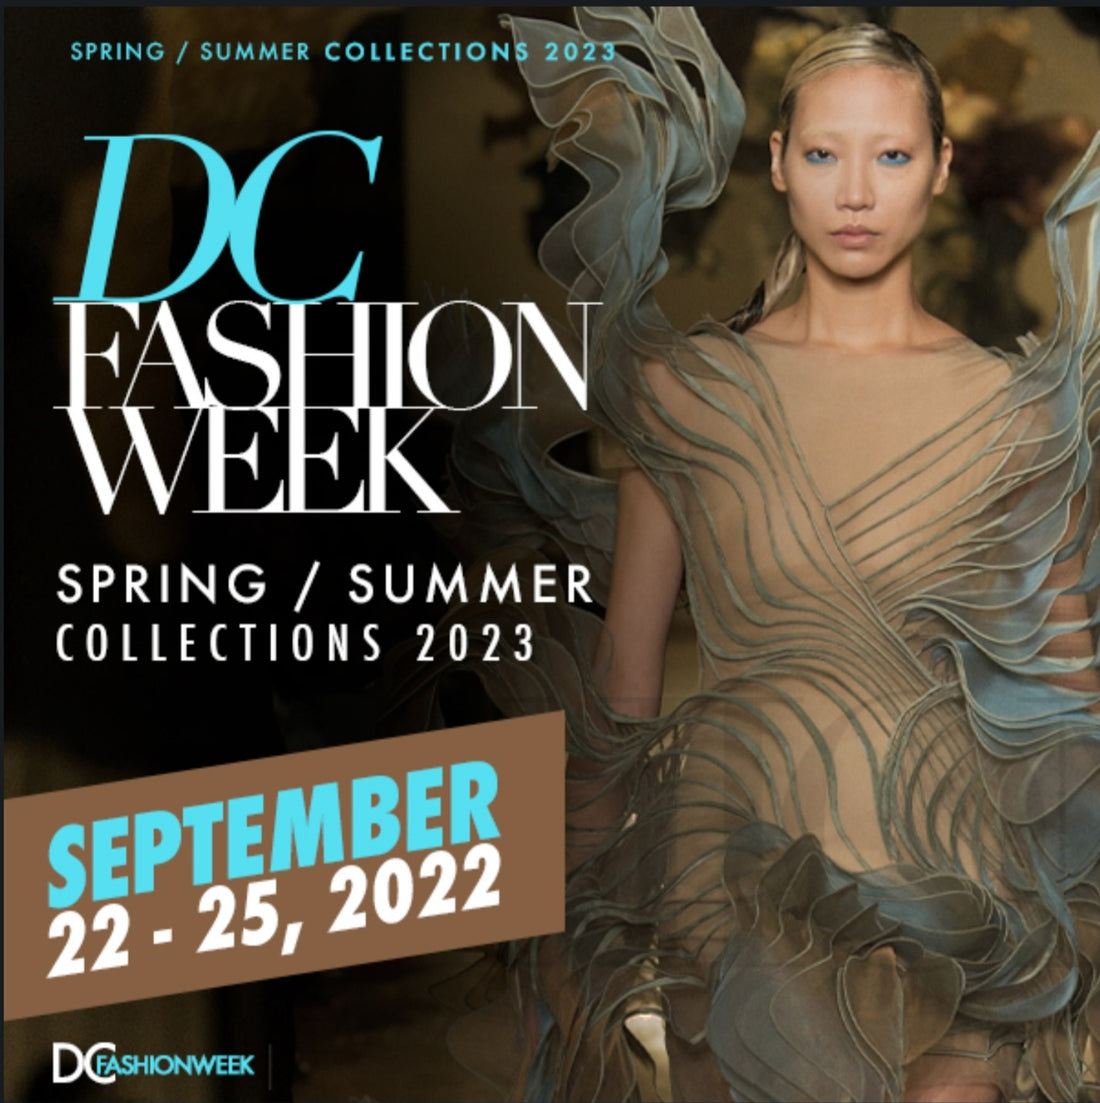 skcreations llc, dc fashion week, fashion week, 2022 shows, fashion designer, emerging designer,